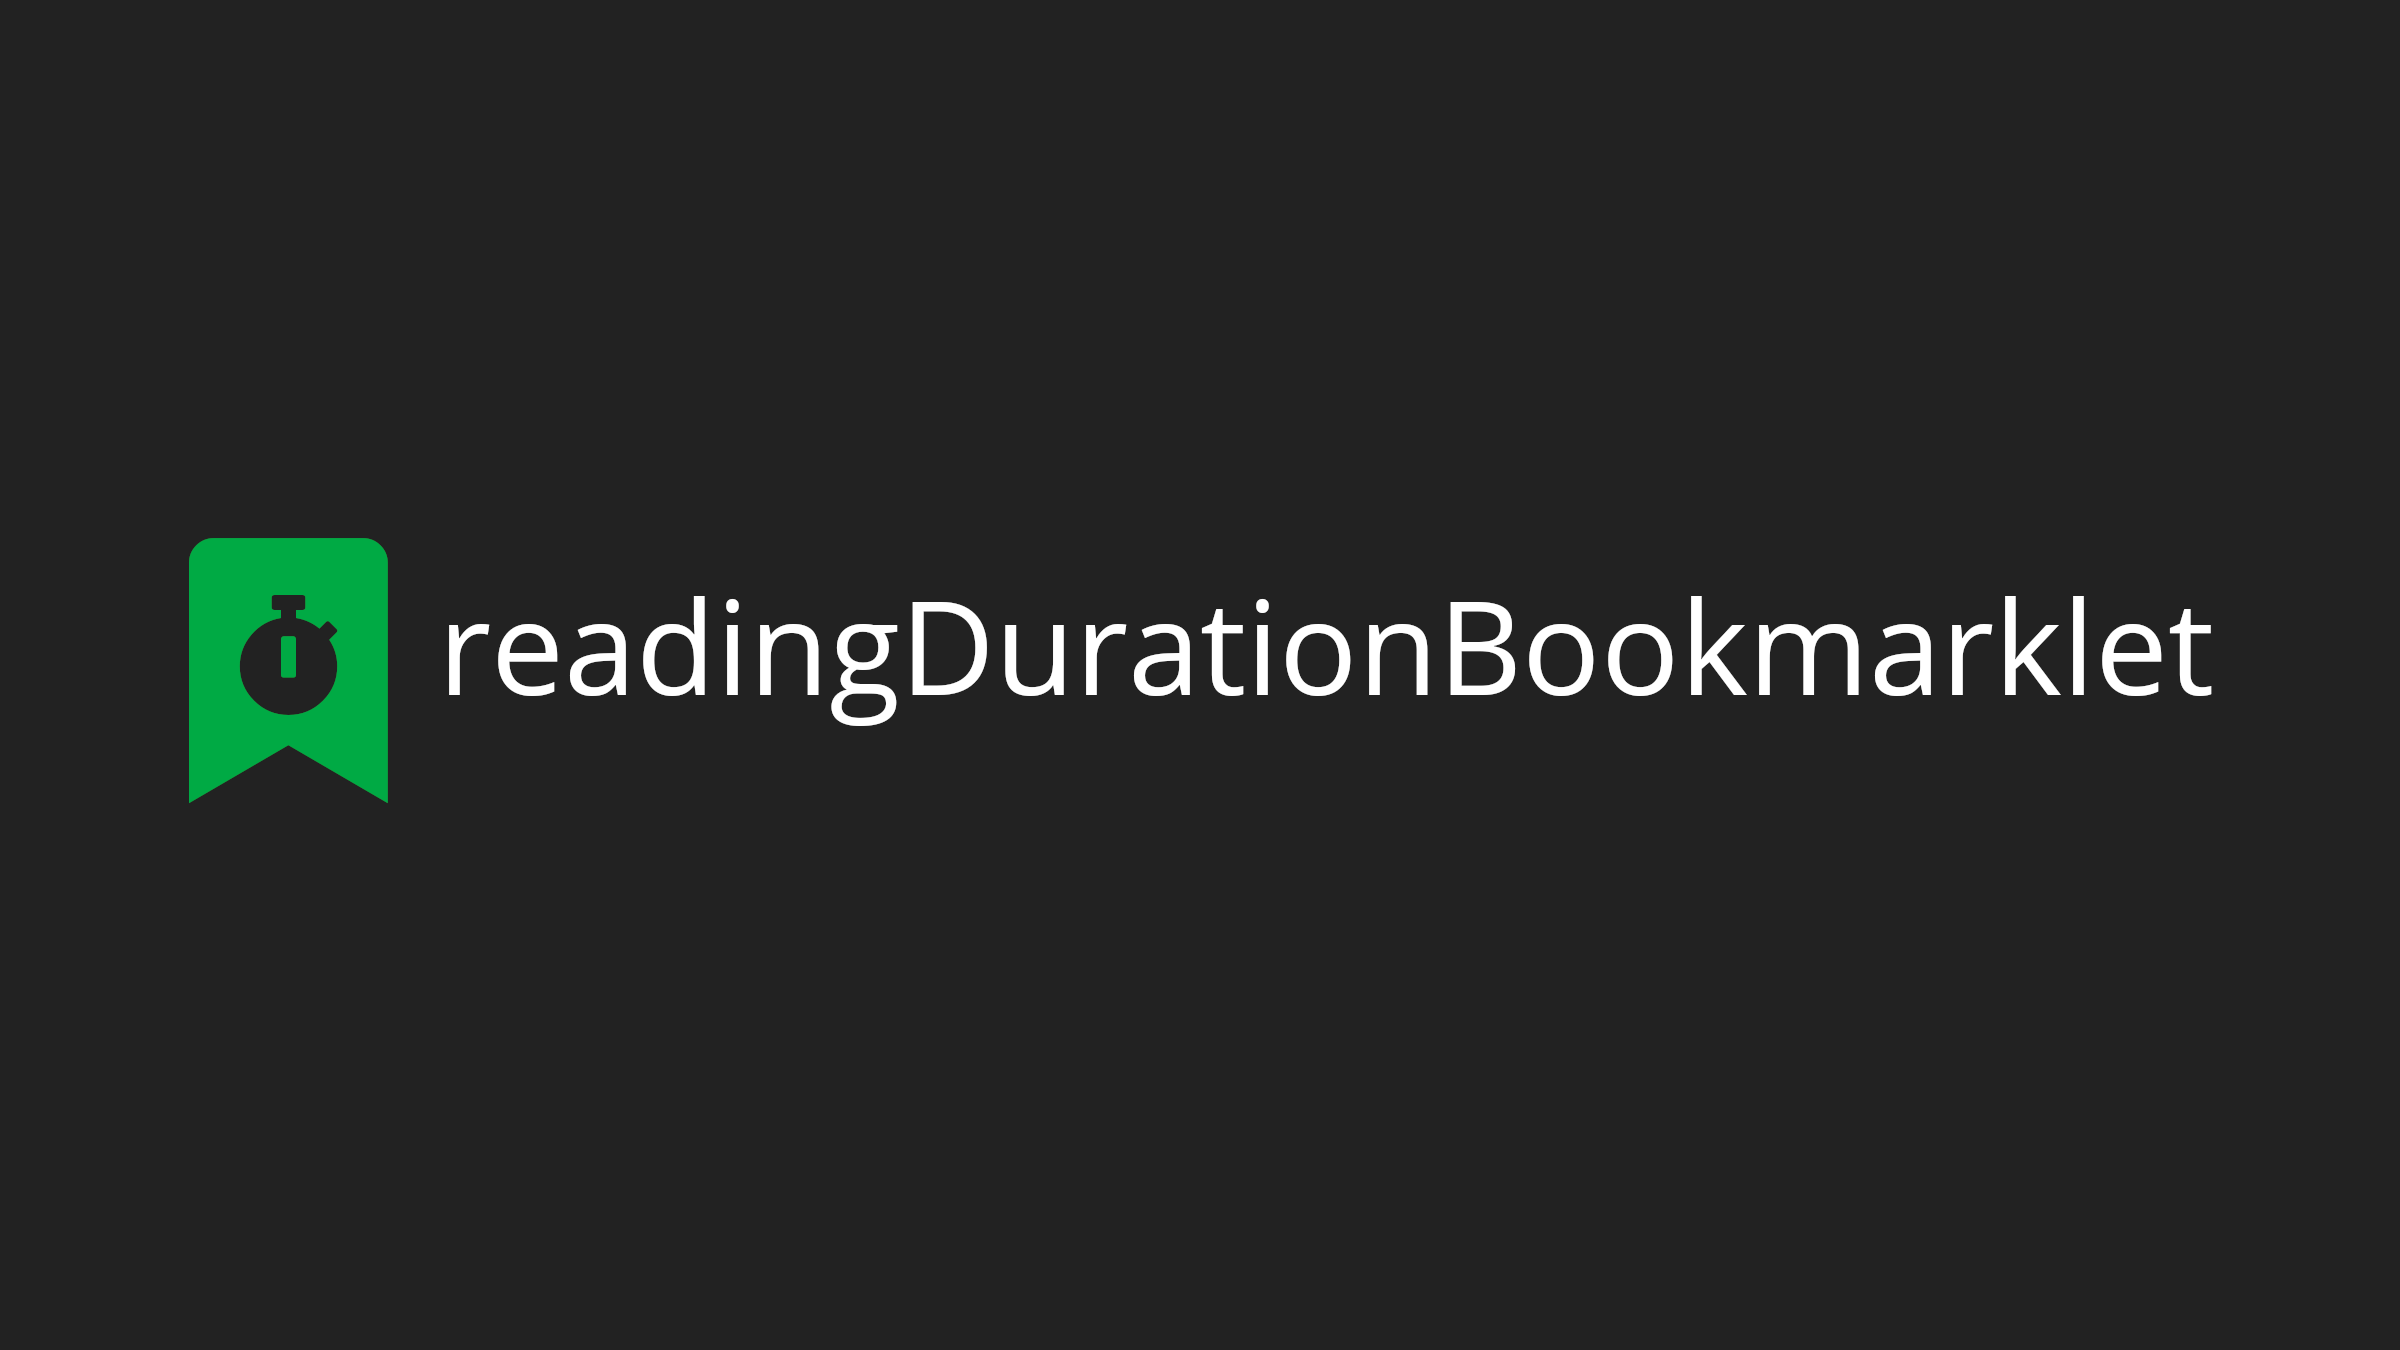 readingDurationBookmarklet